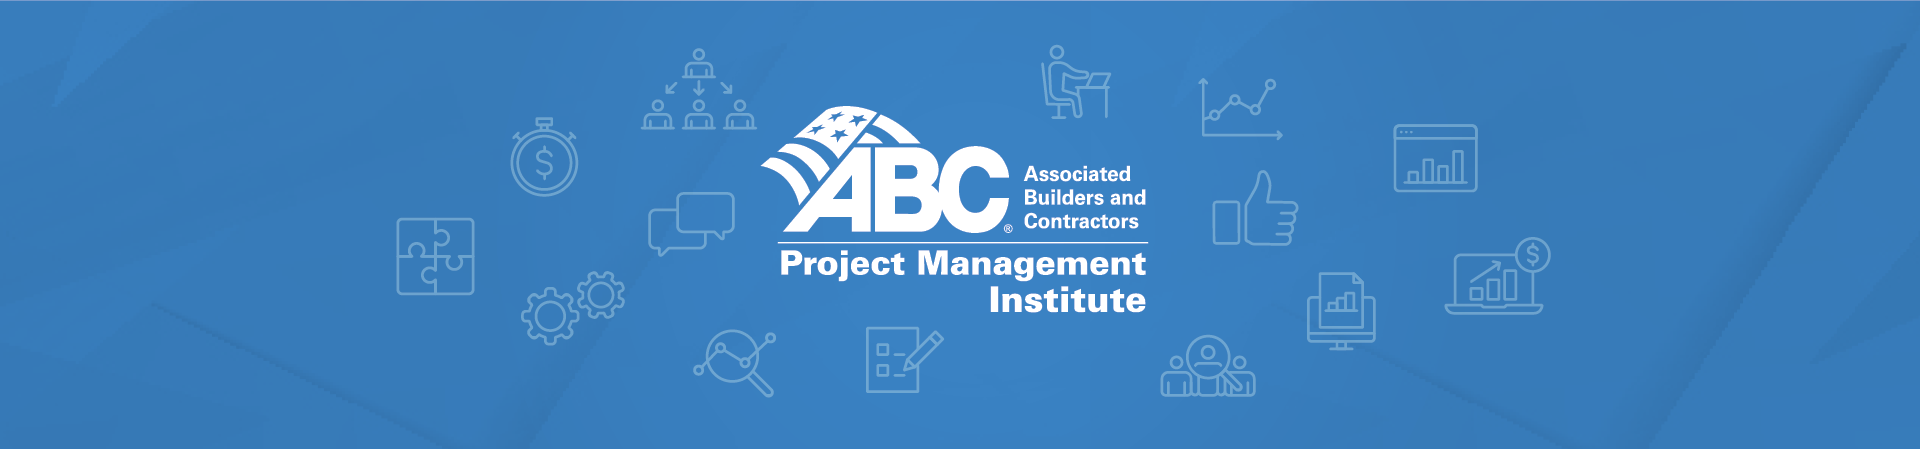 Project Management Institute - ABC Keystone - ABC National